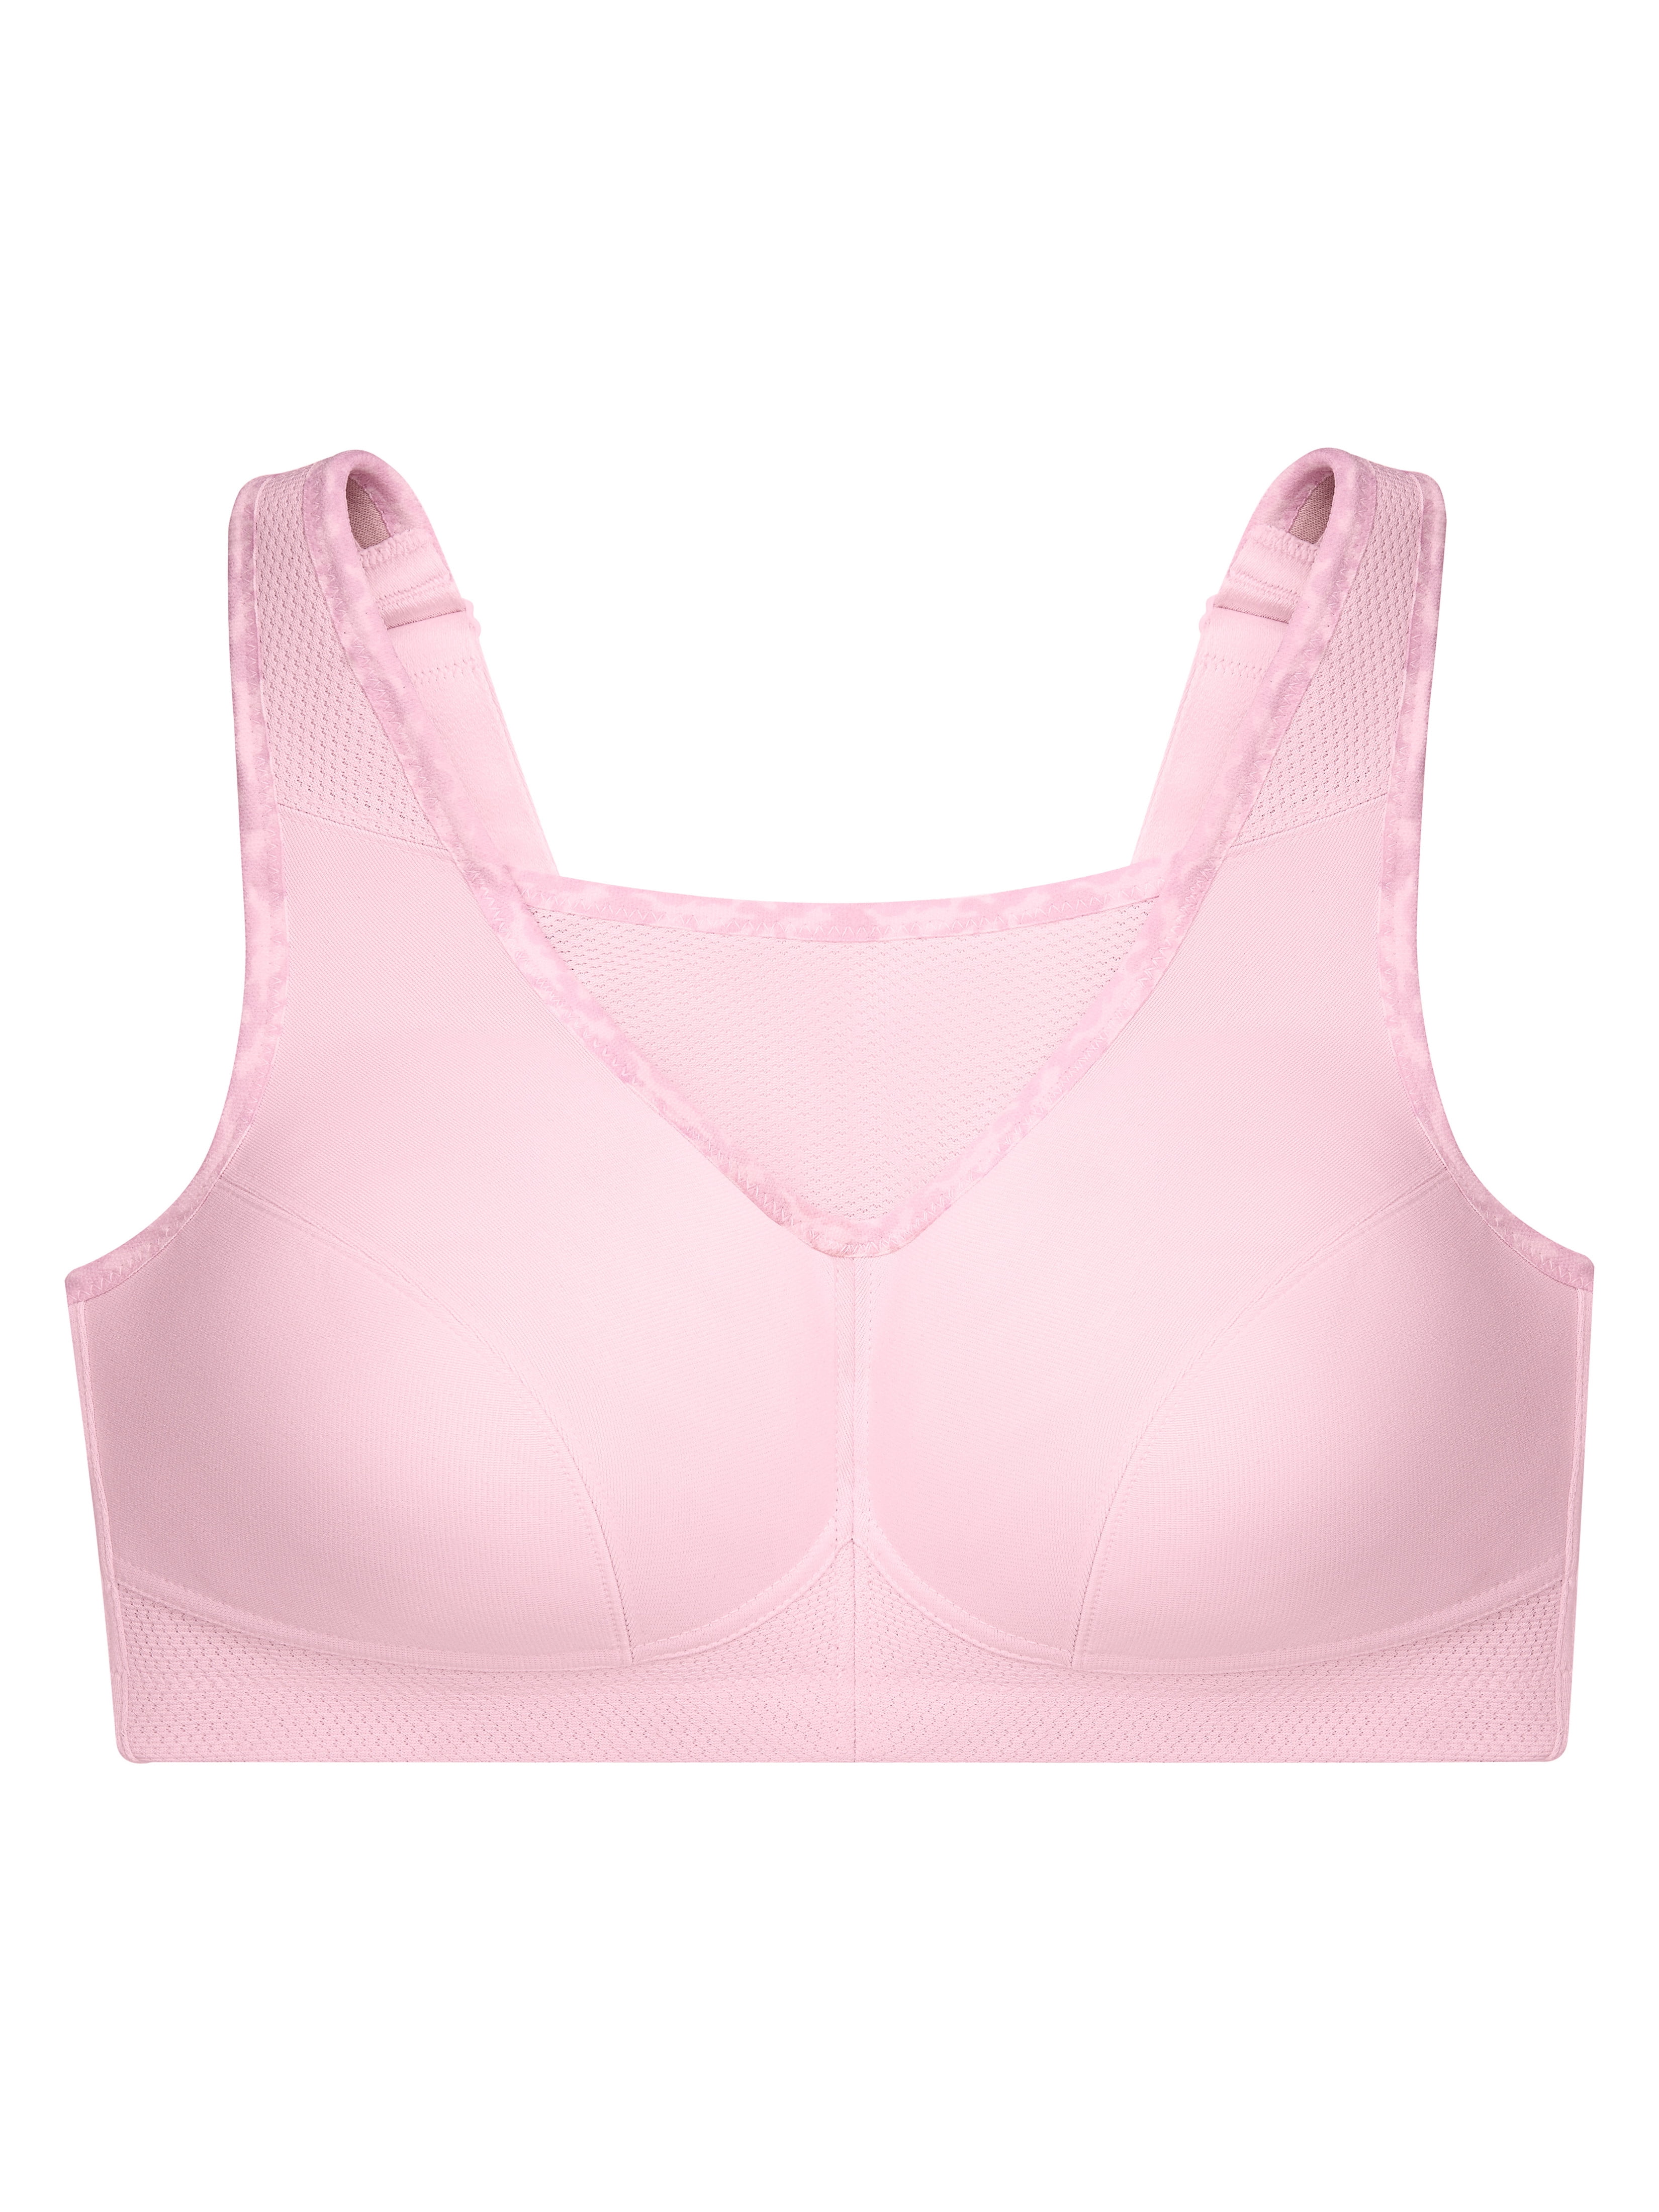 Glamorise Womens No-Bounce Camisole Sports Wirefree Bra 1066 Parfait Pink  42H